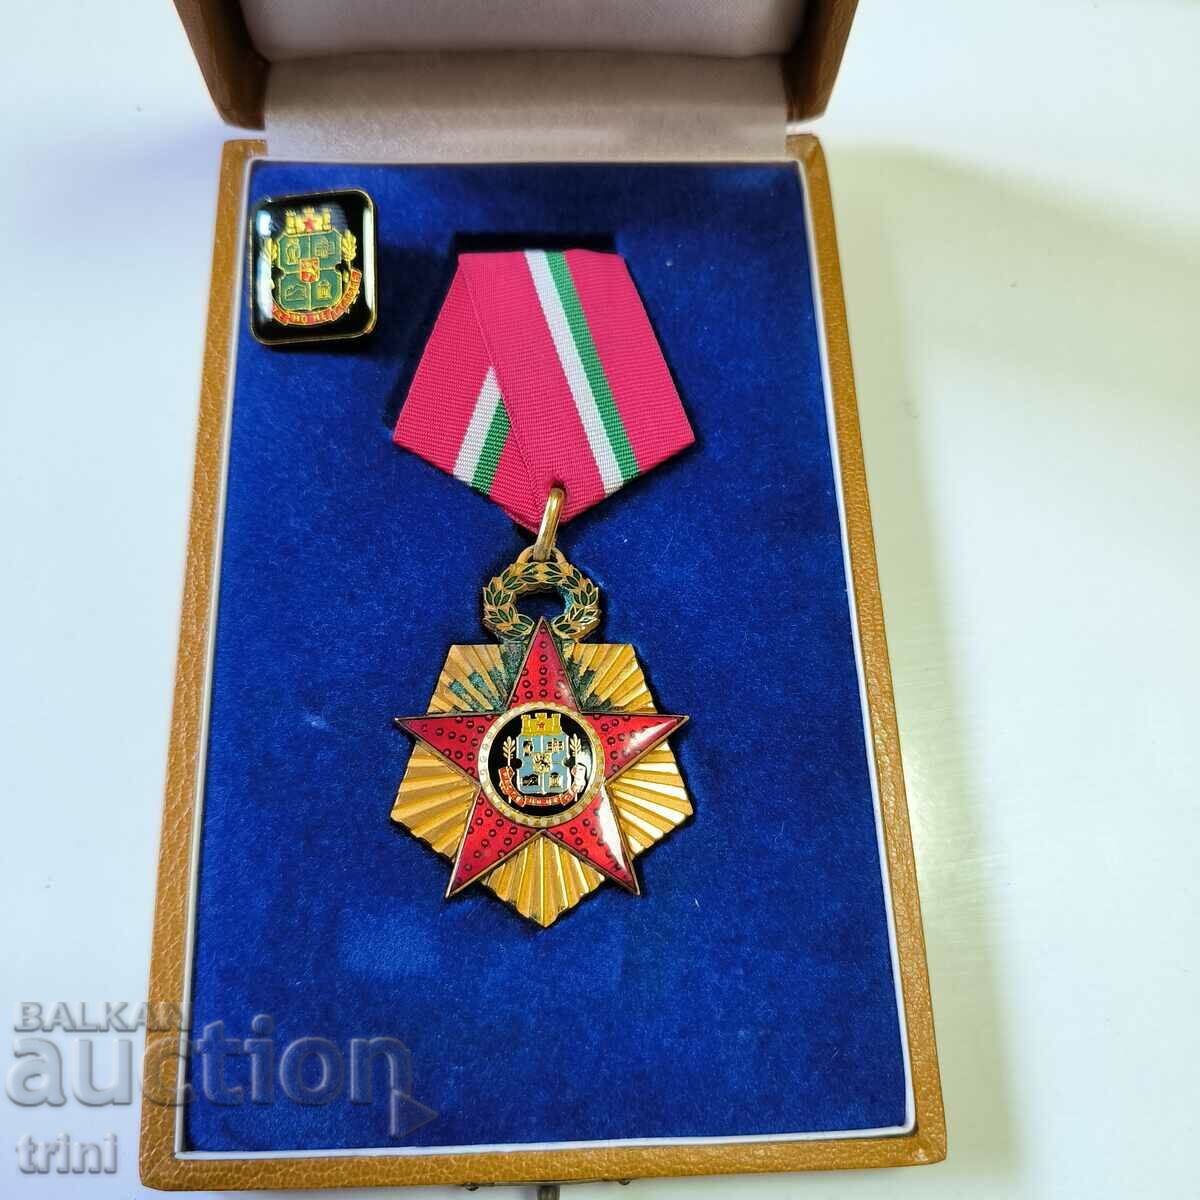 Medalia SOFIA 100 de ani Capitala Bulgariei 1979 semn plus